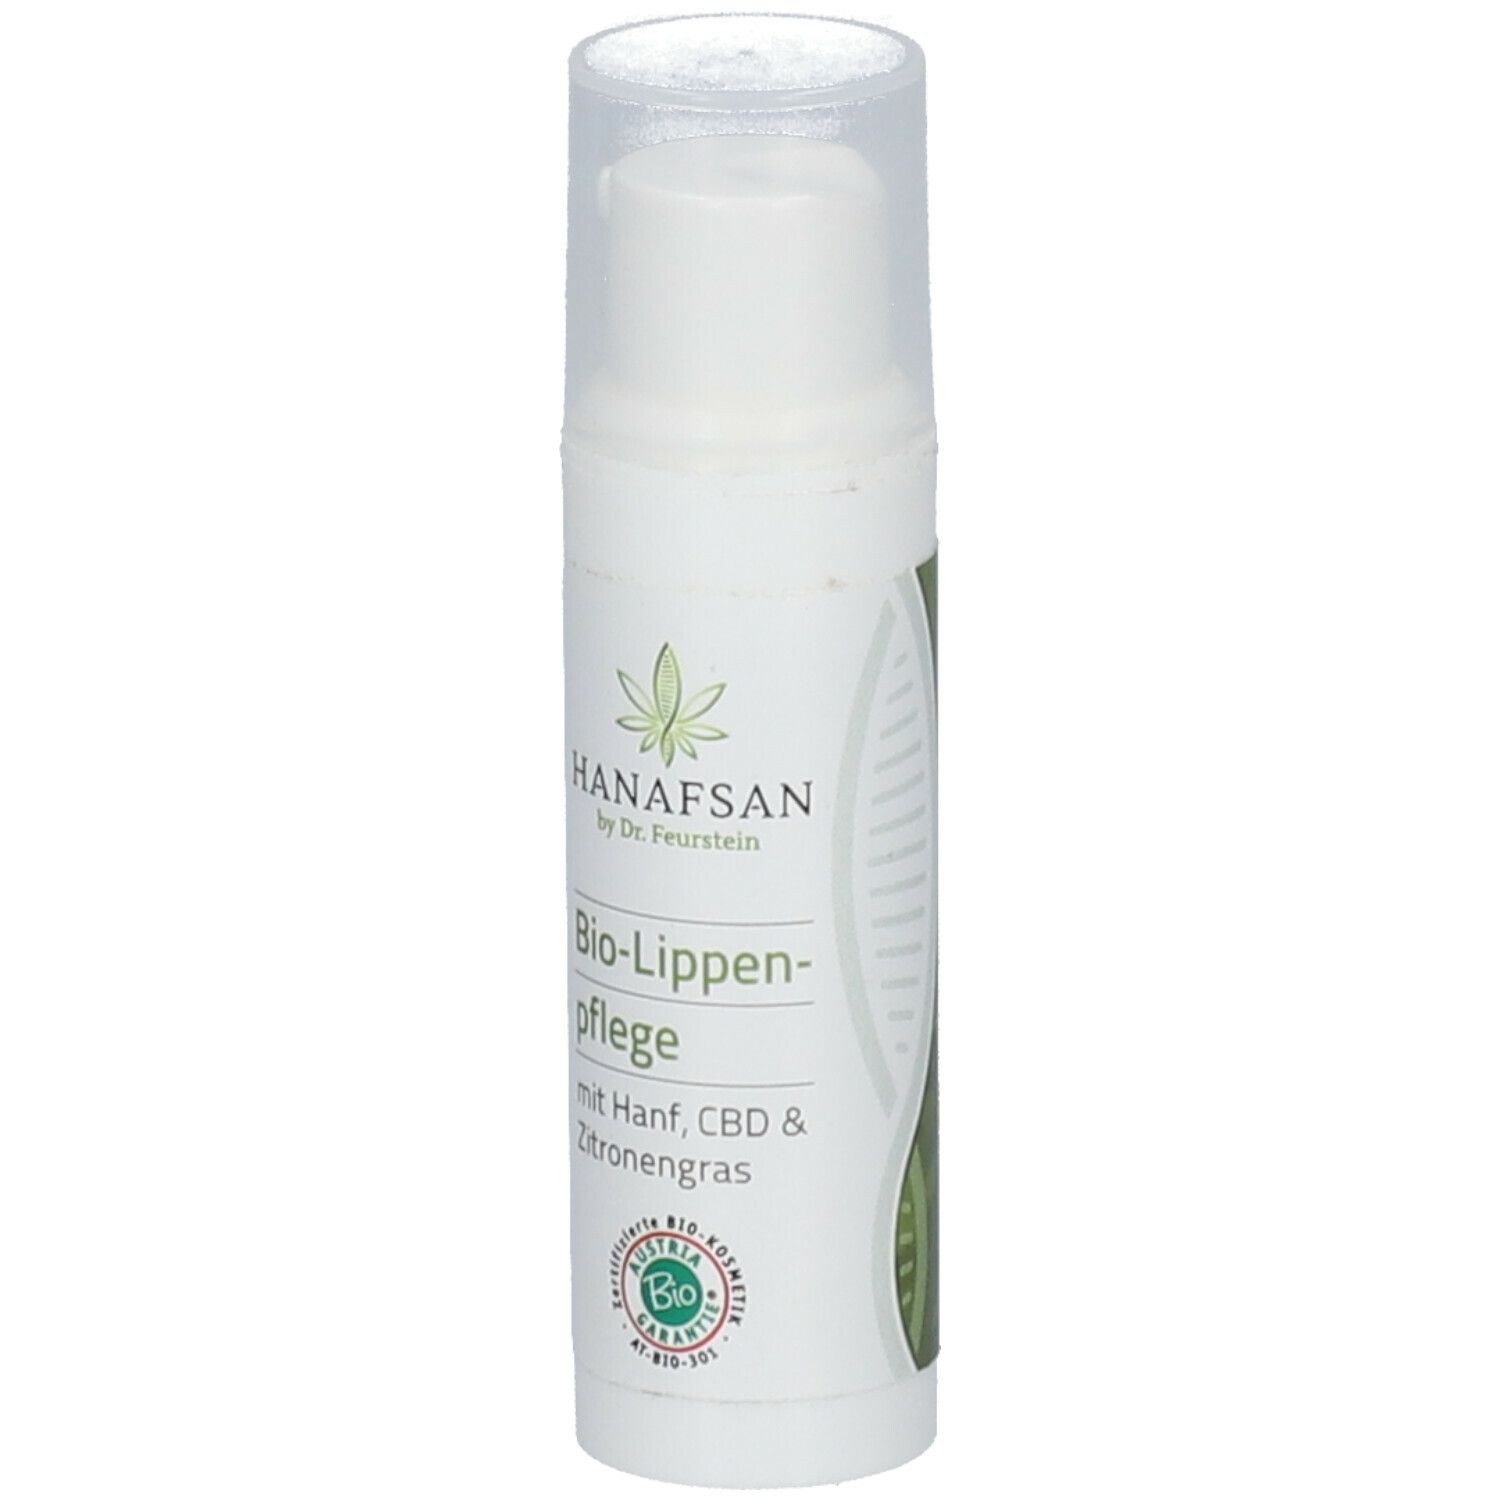 HANFASAN® Bio-Lippenpflege 0,3 % CBD